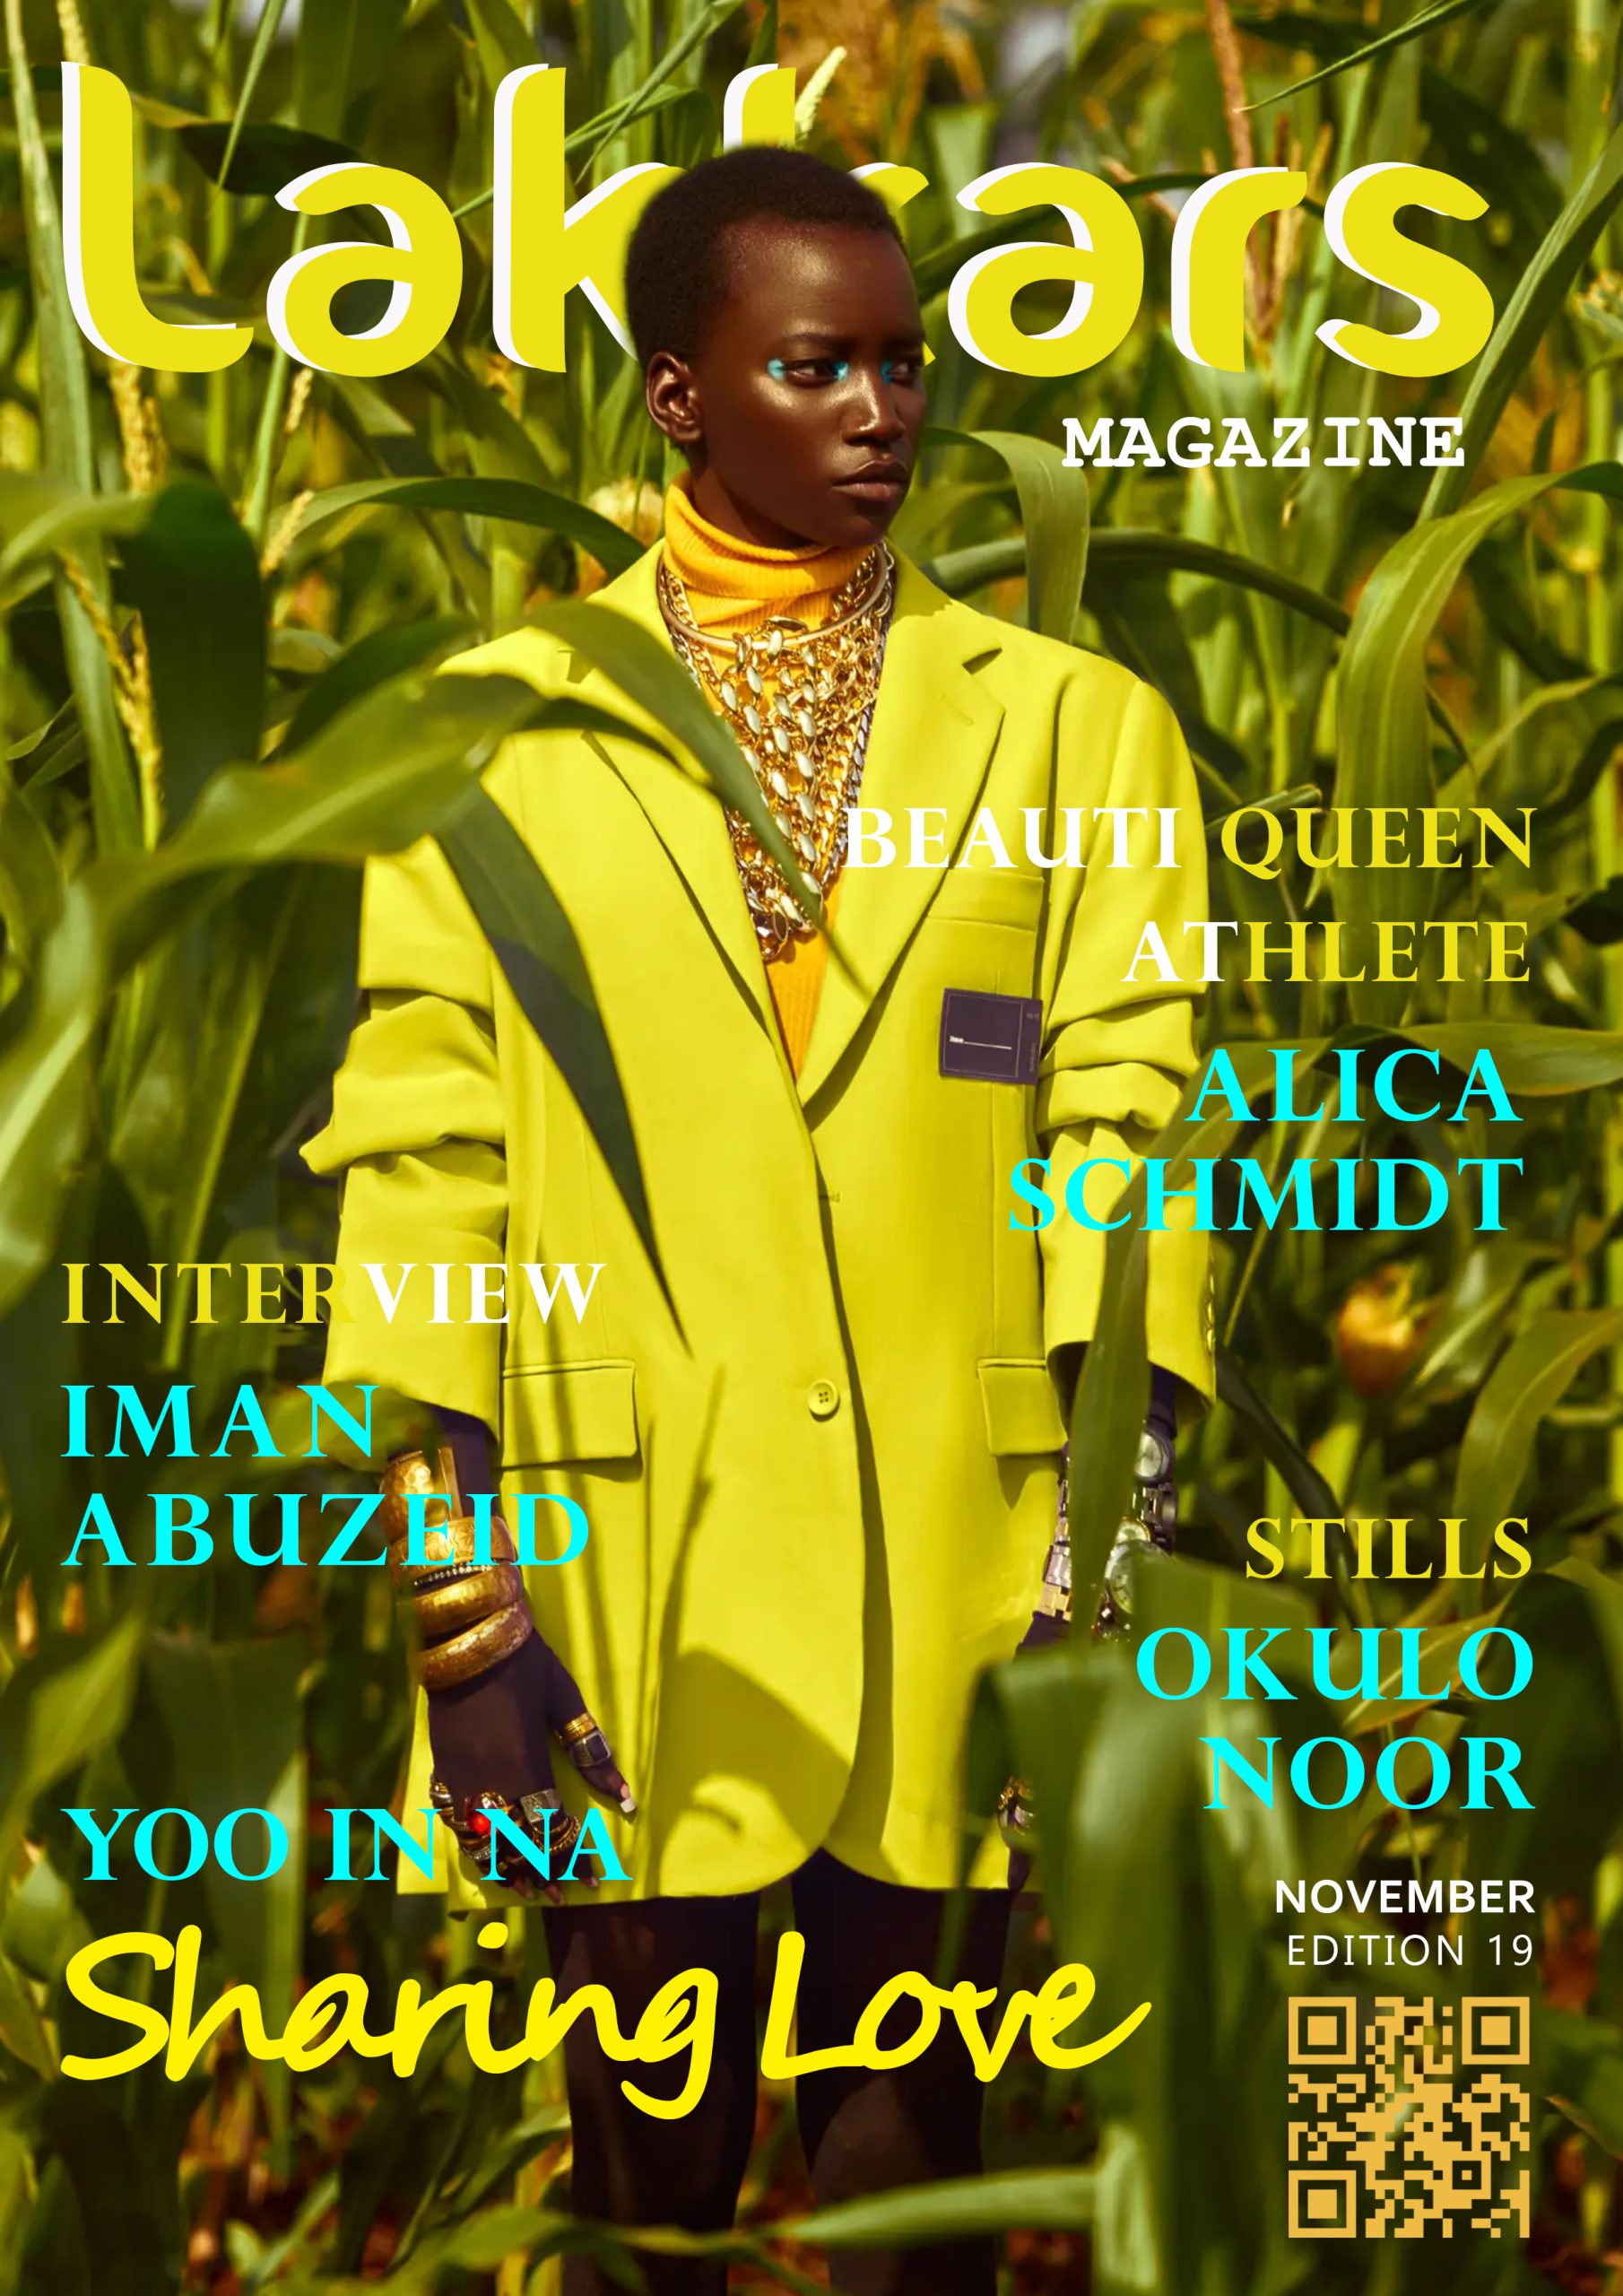 lakkars magazine | women empowerment | fashion magazine